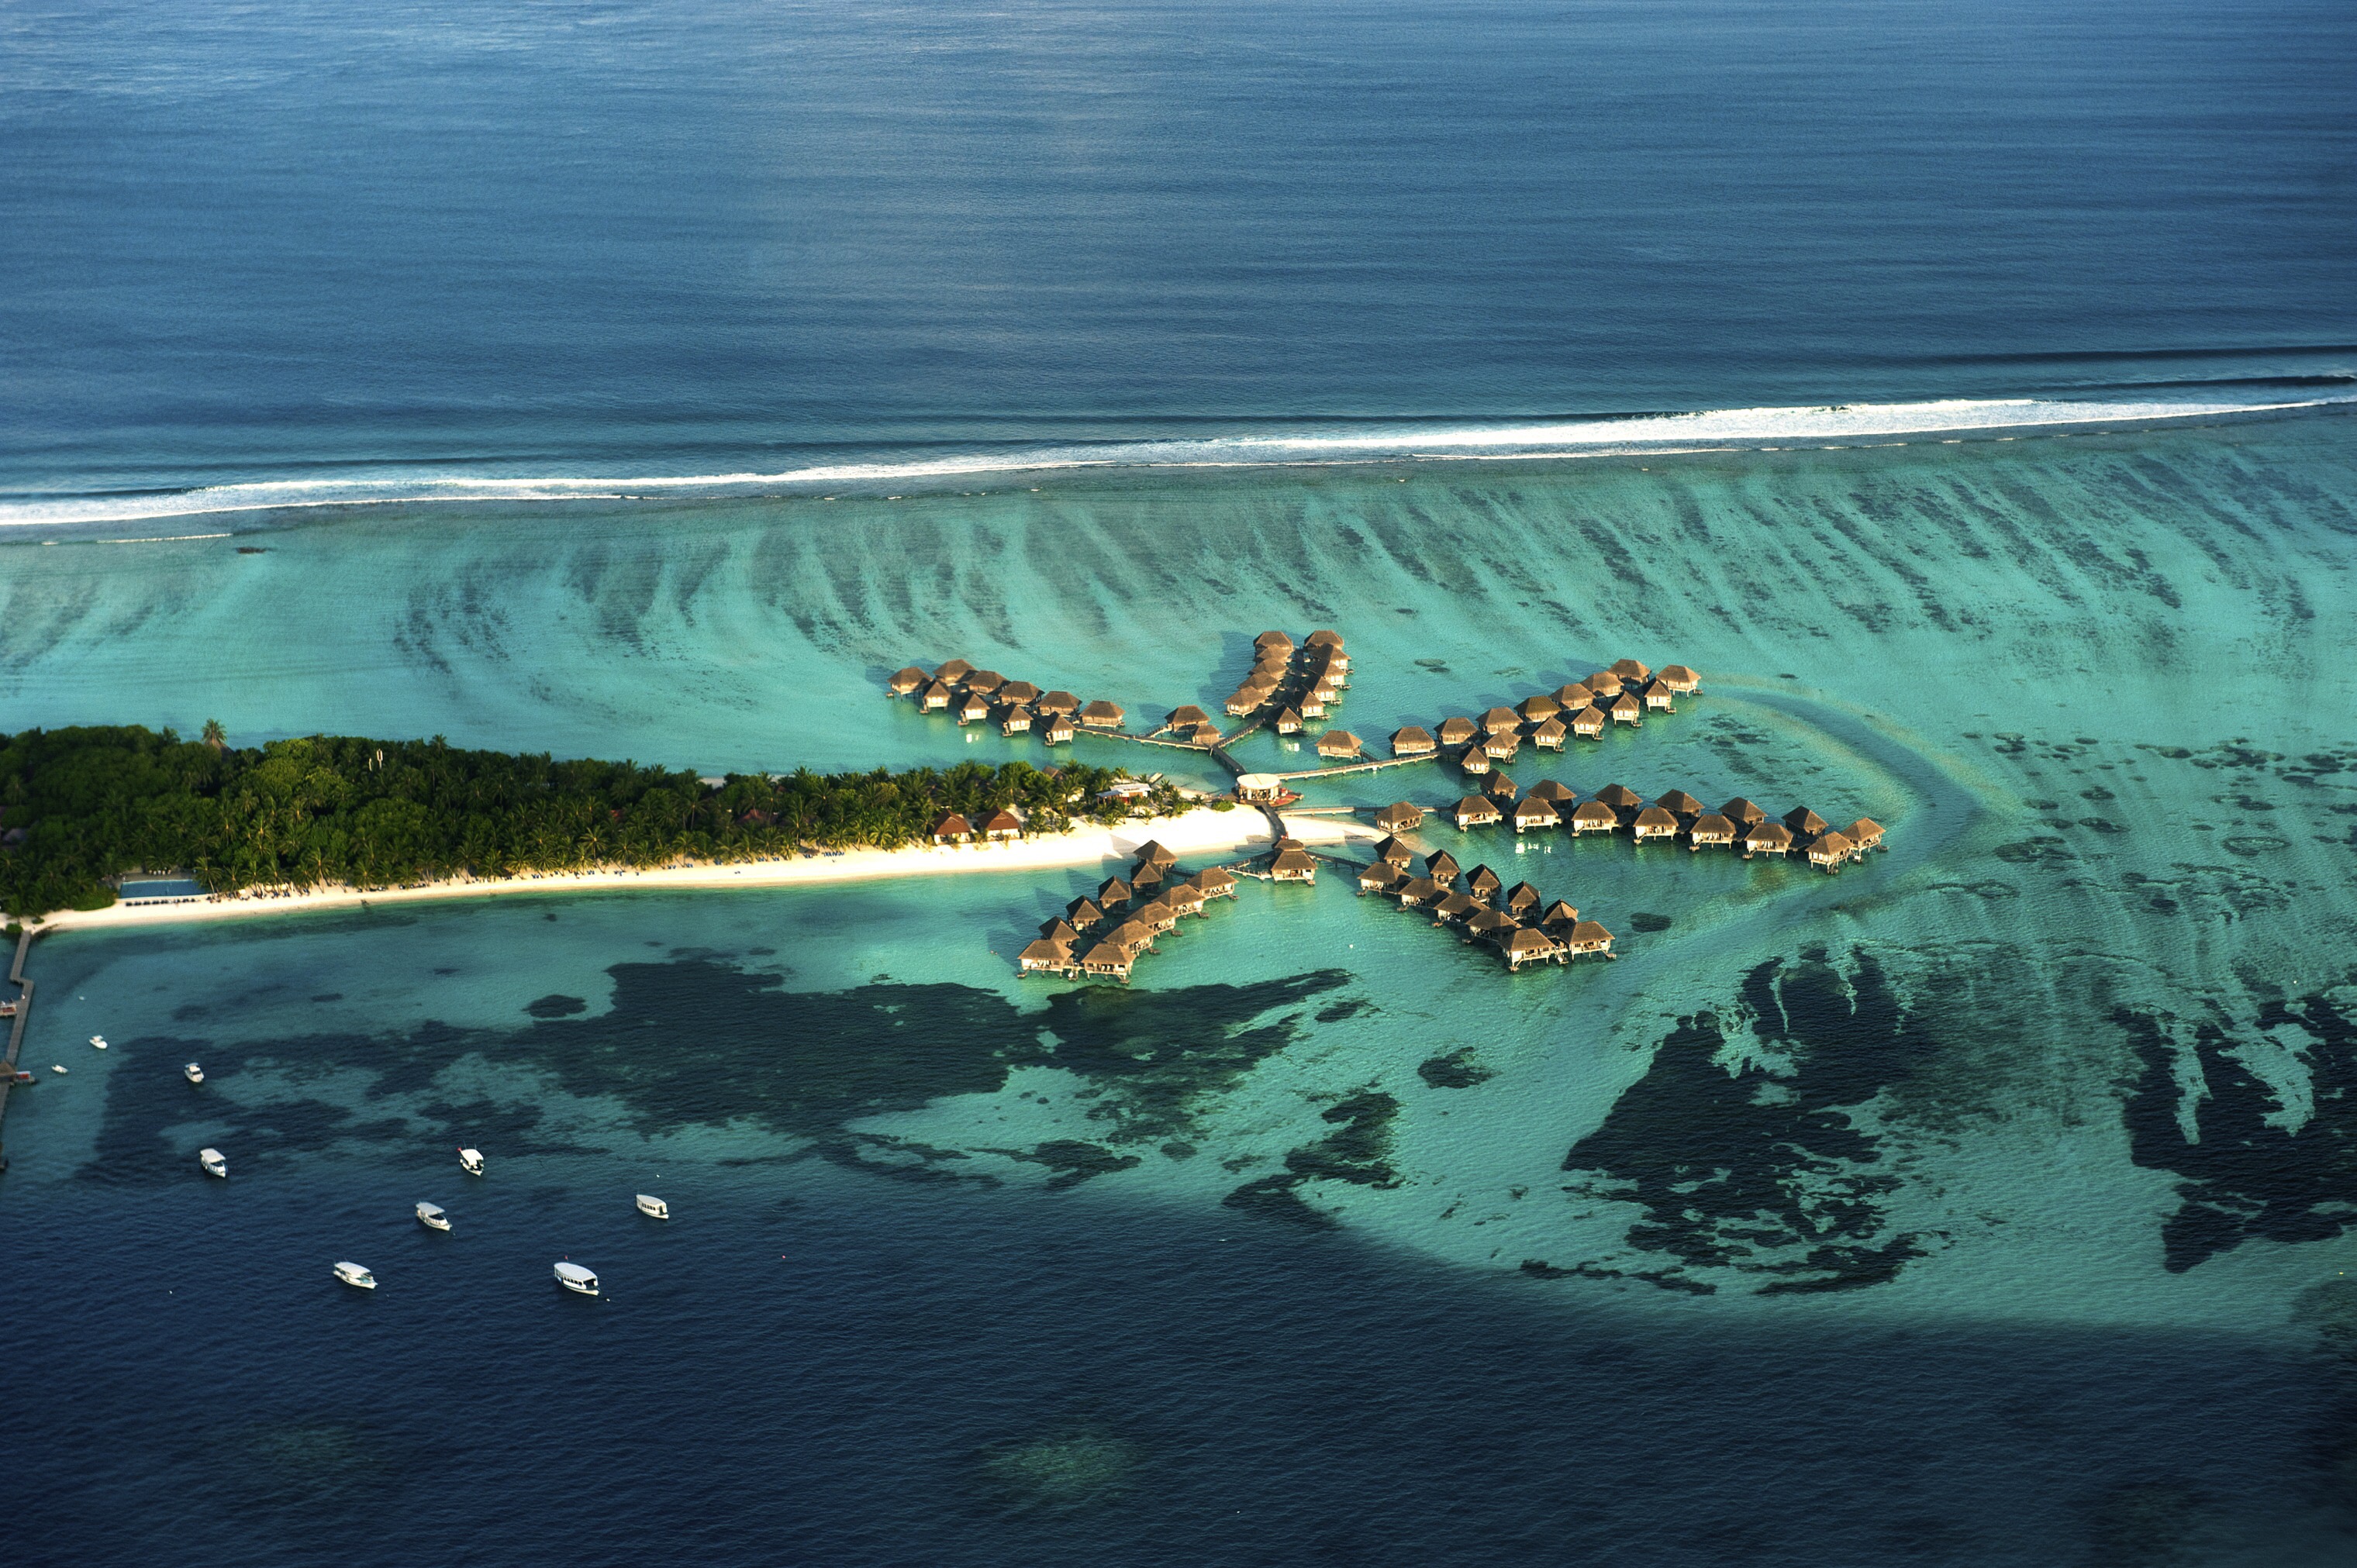 maldives tourism blog